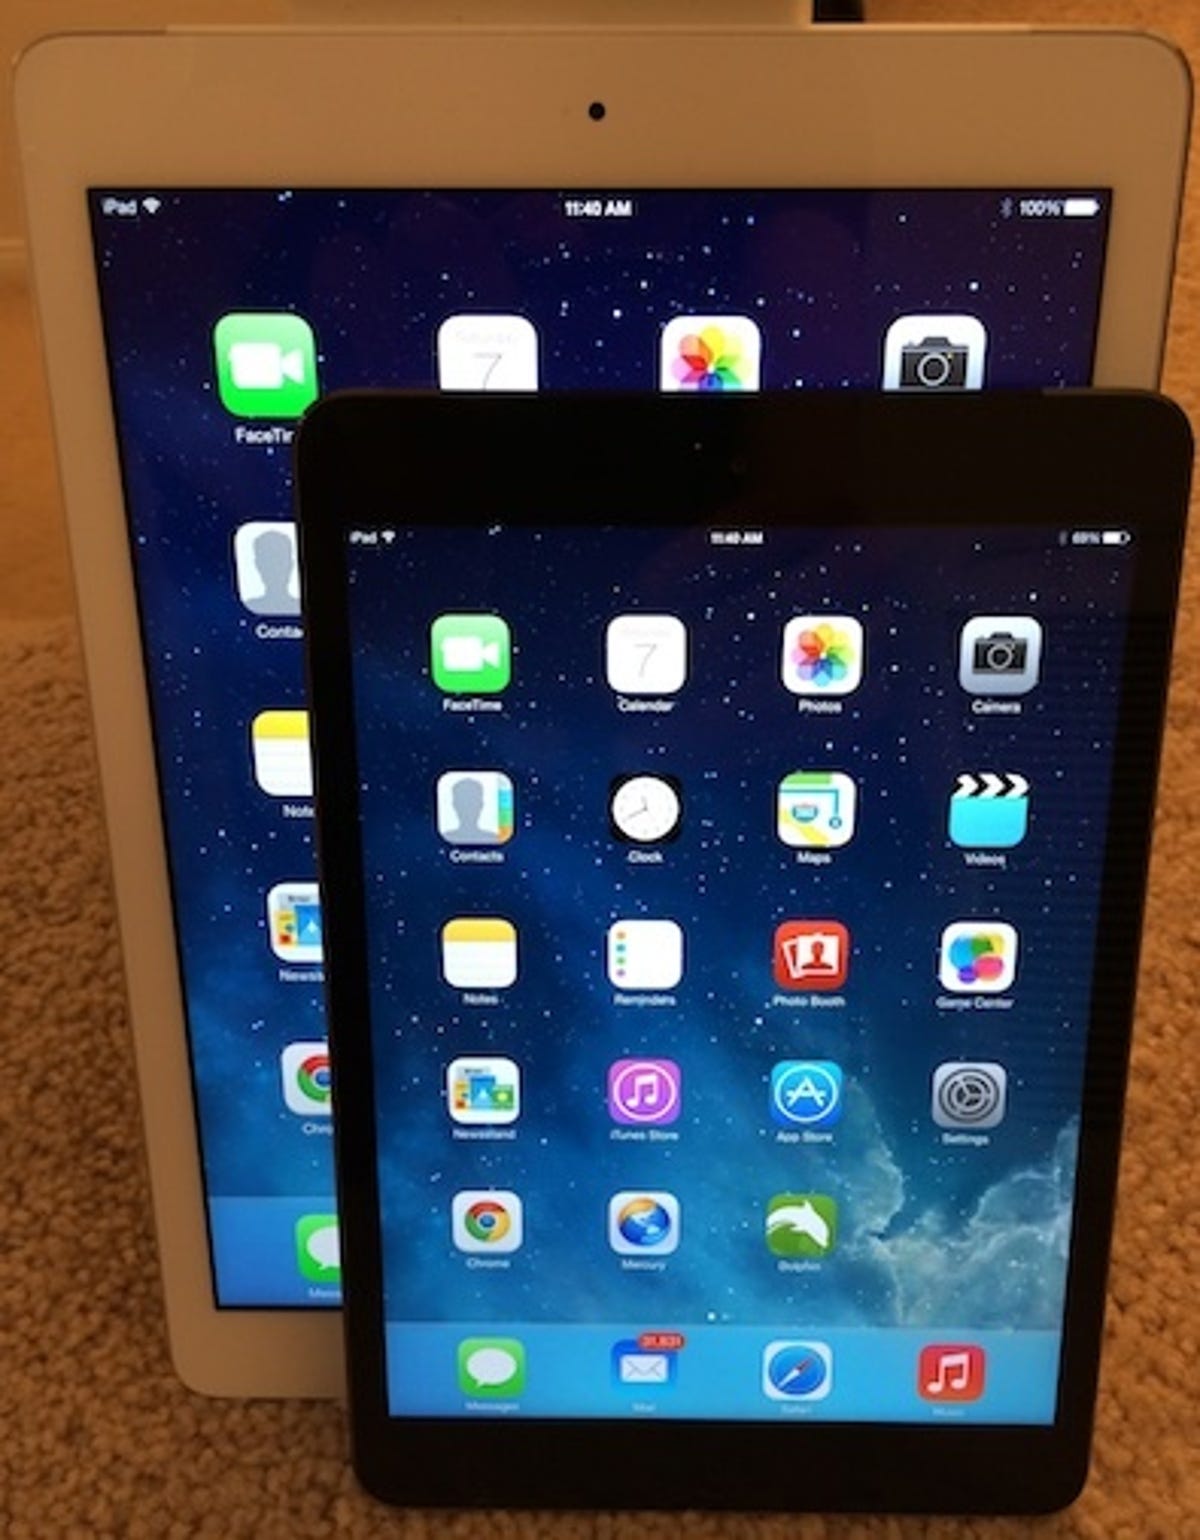 iPad Mini Retina (front) and iPad Air.